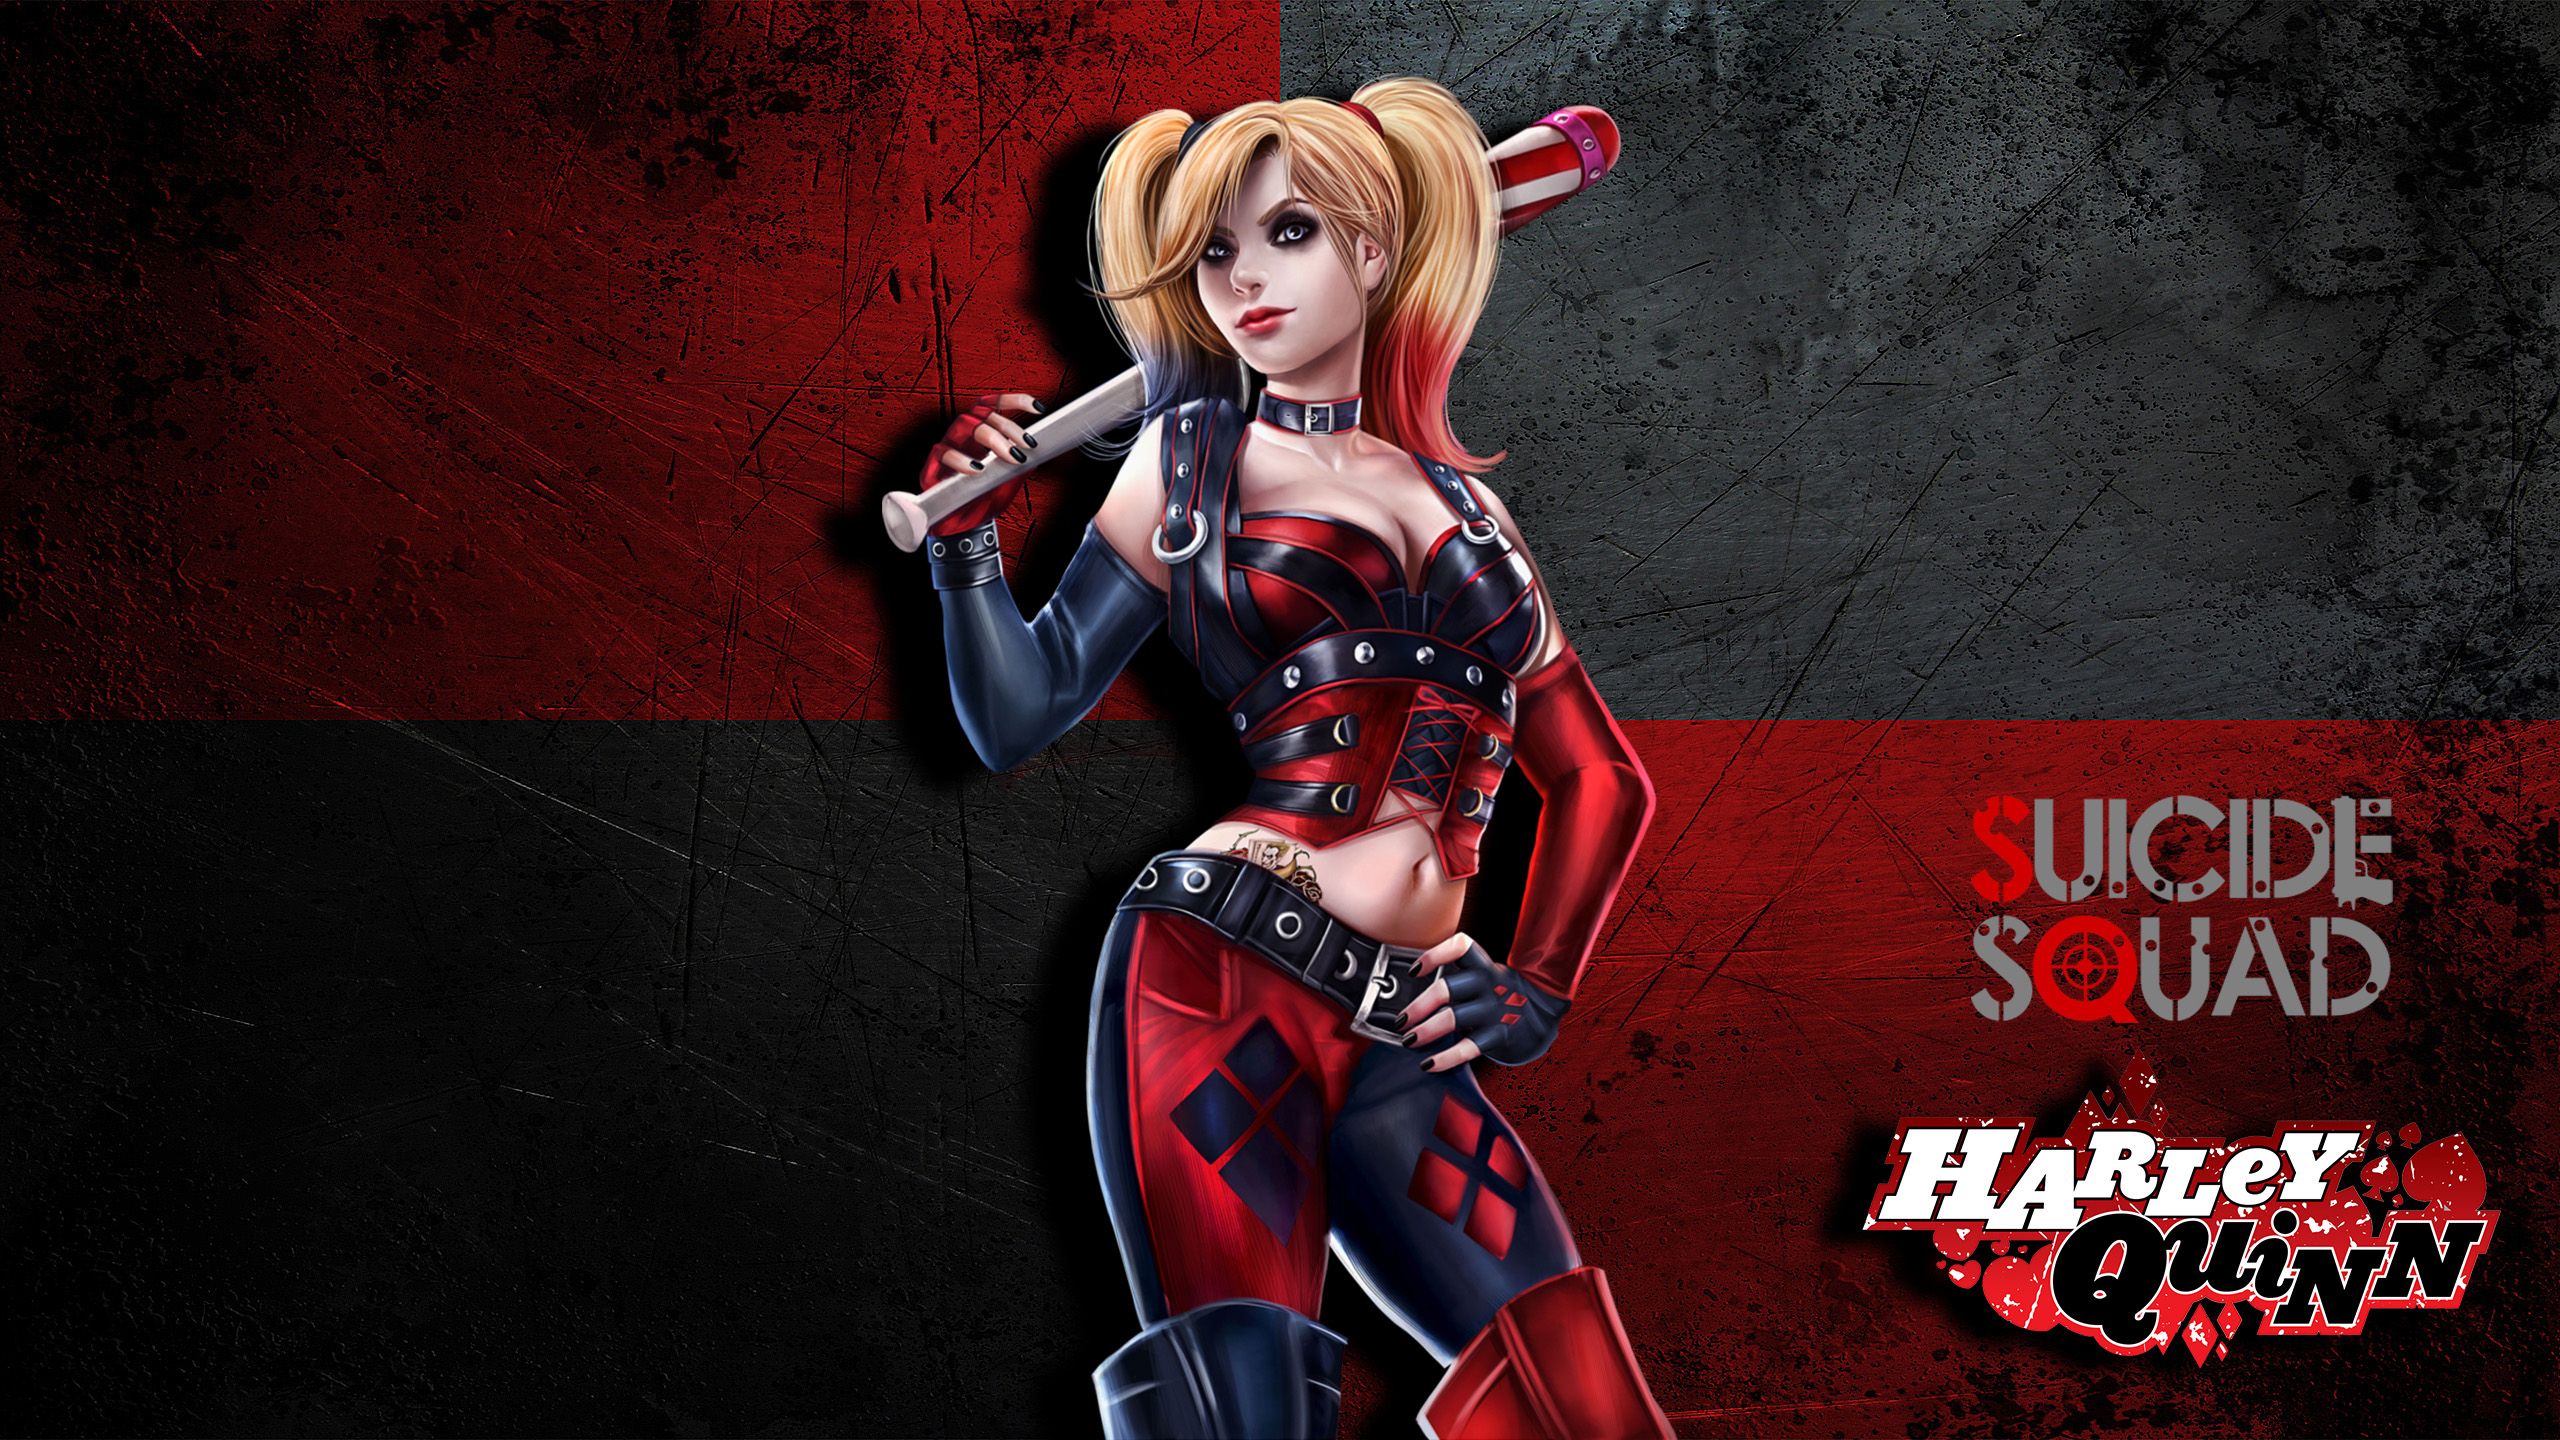 50+] Harley Quinn Suicide Squad Wallpapers - WallpaperSafari